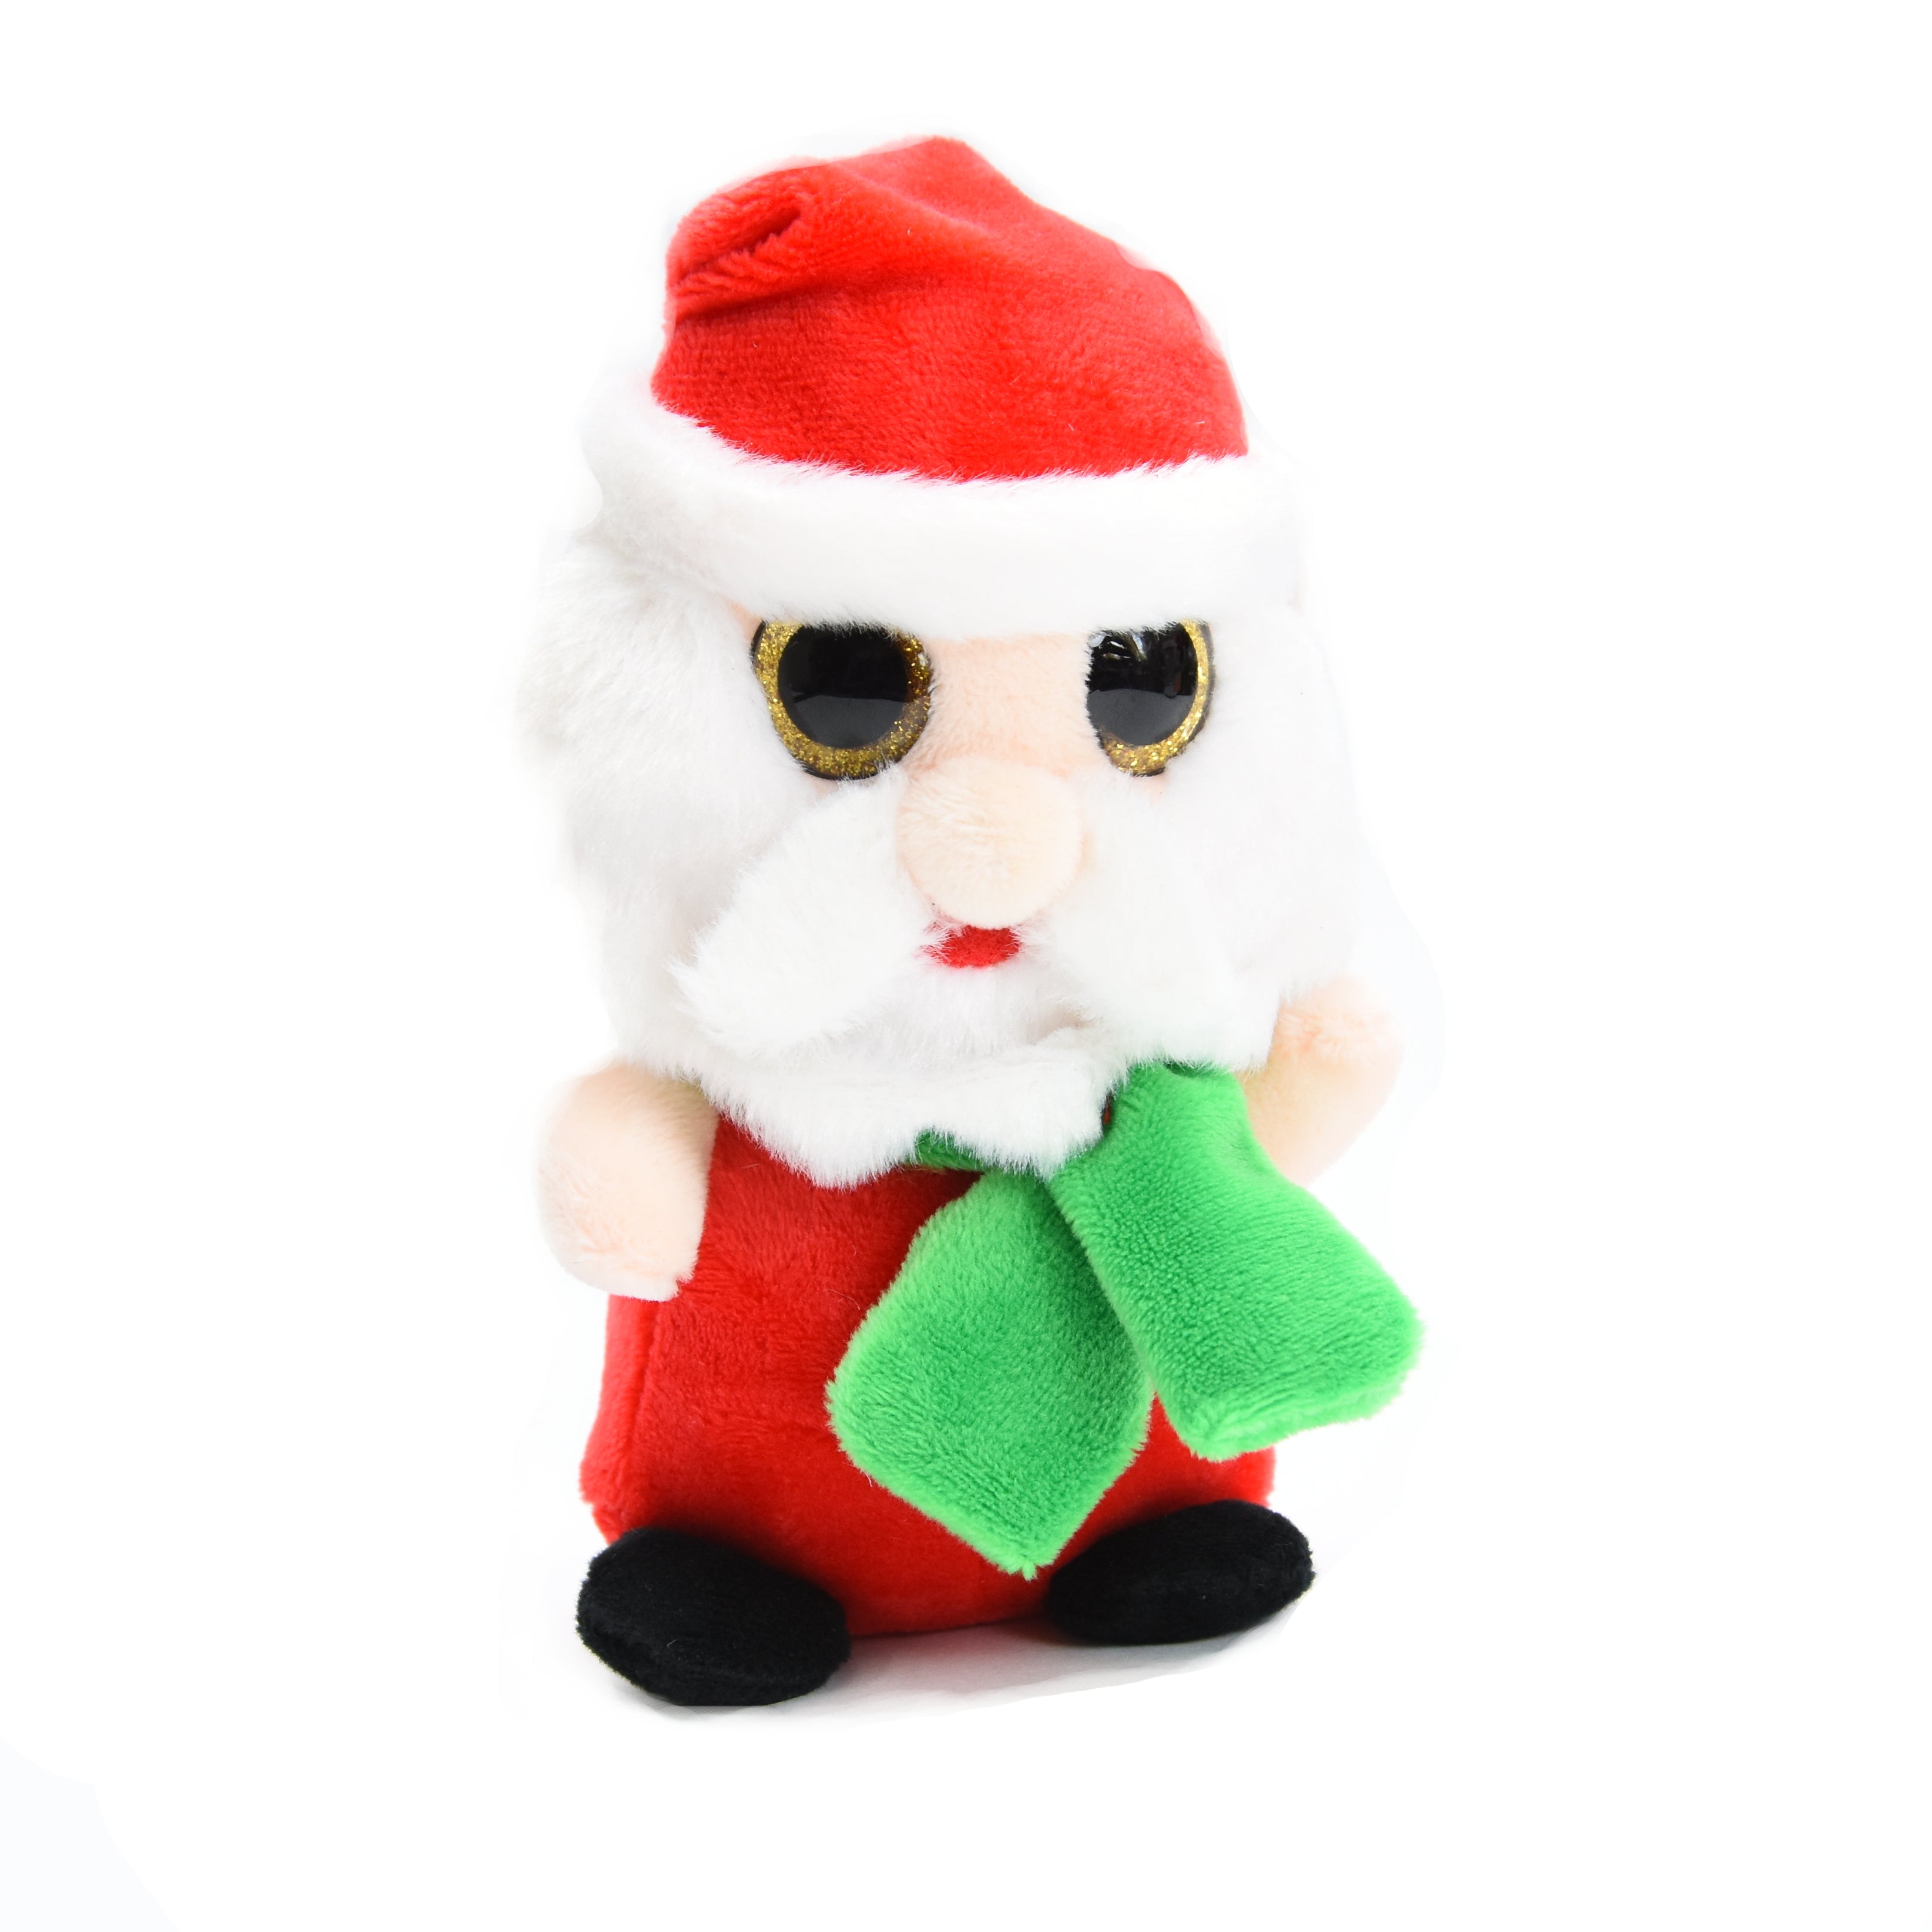 Soft Toy - Glittery Eye Santa Claus, 16cm, 1pc